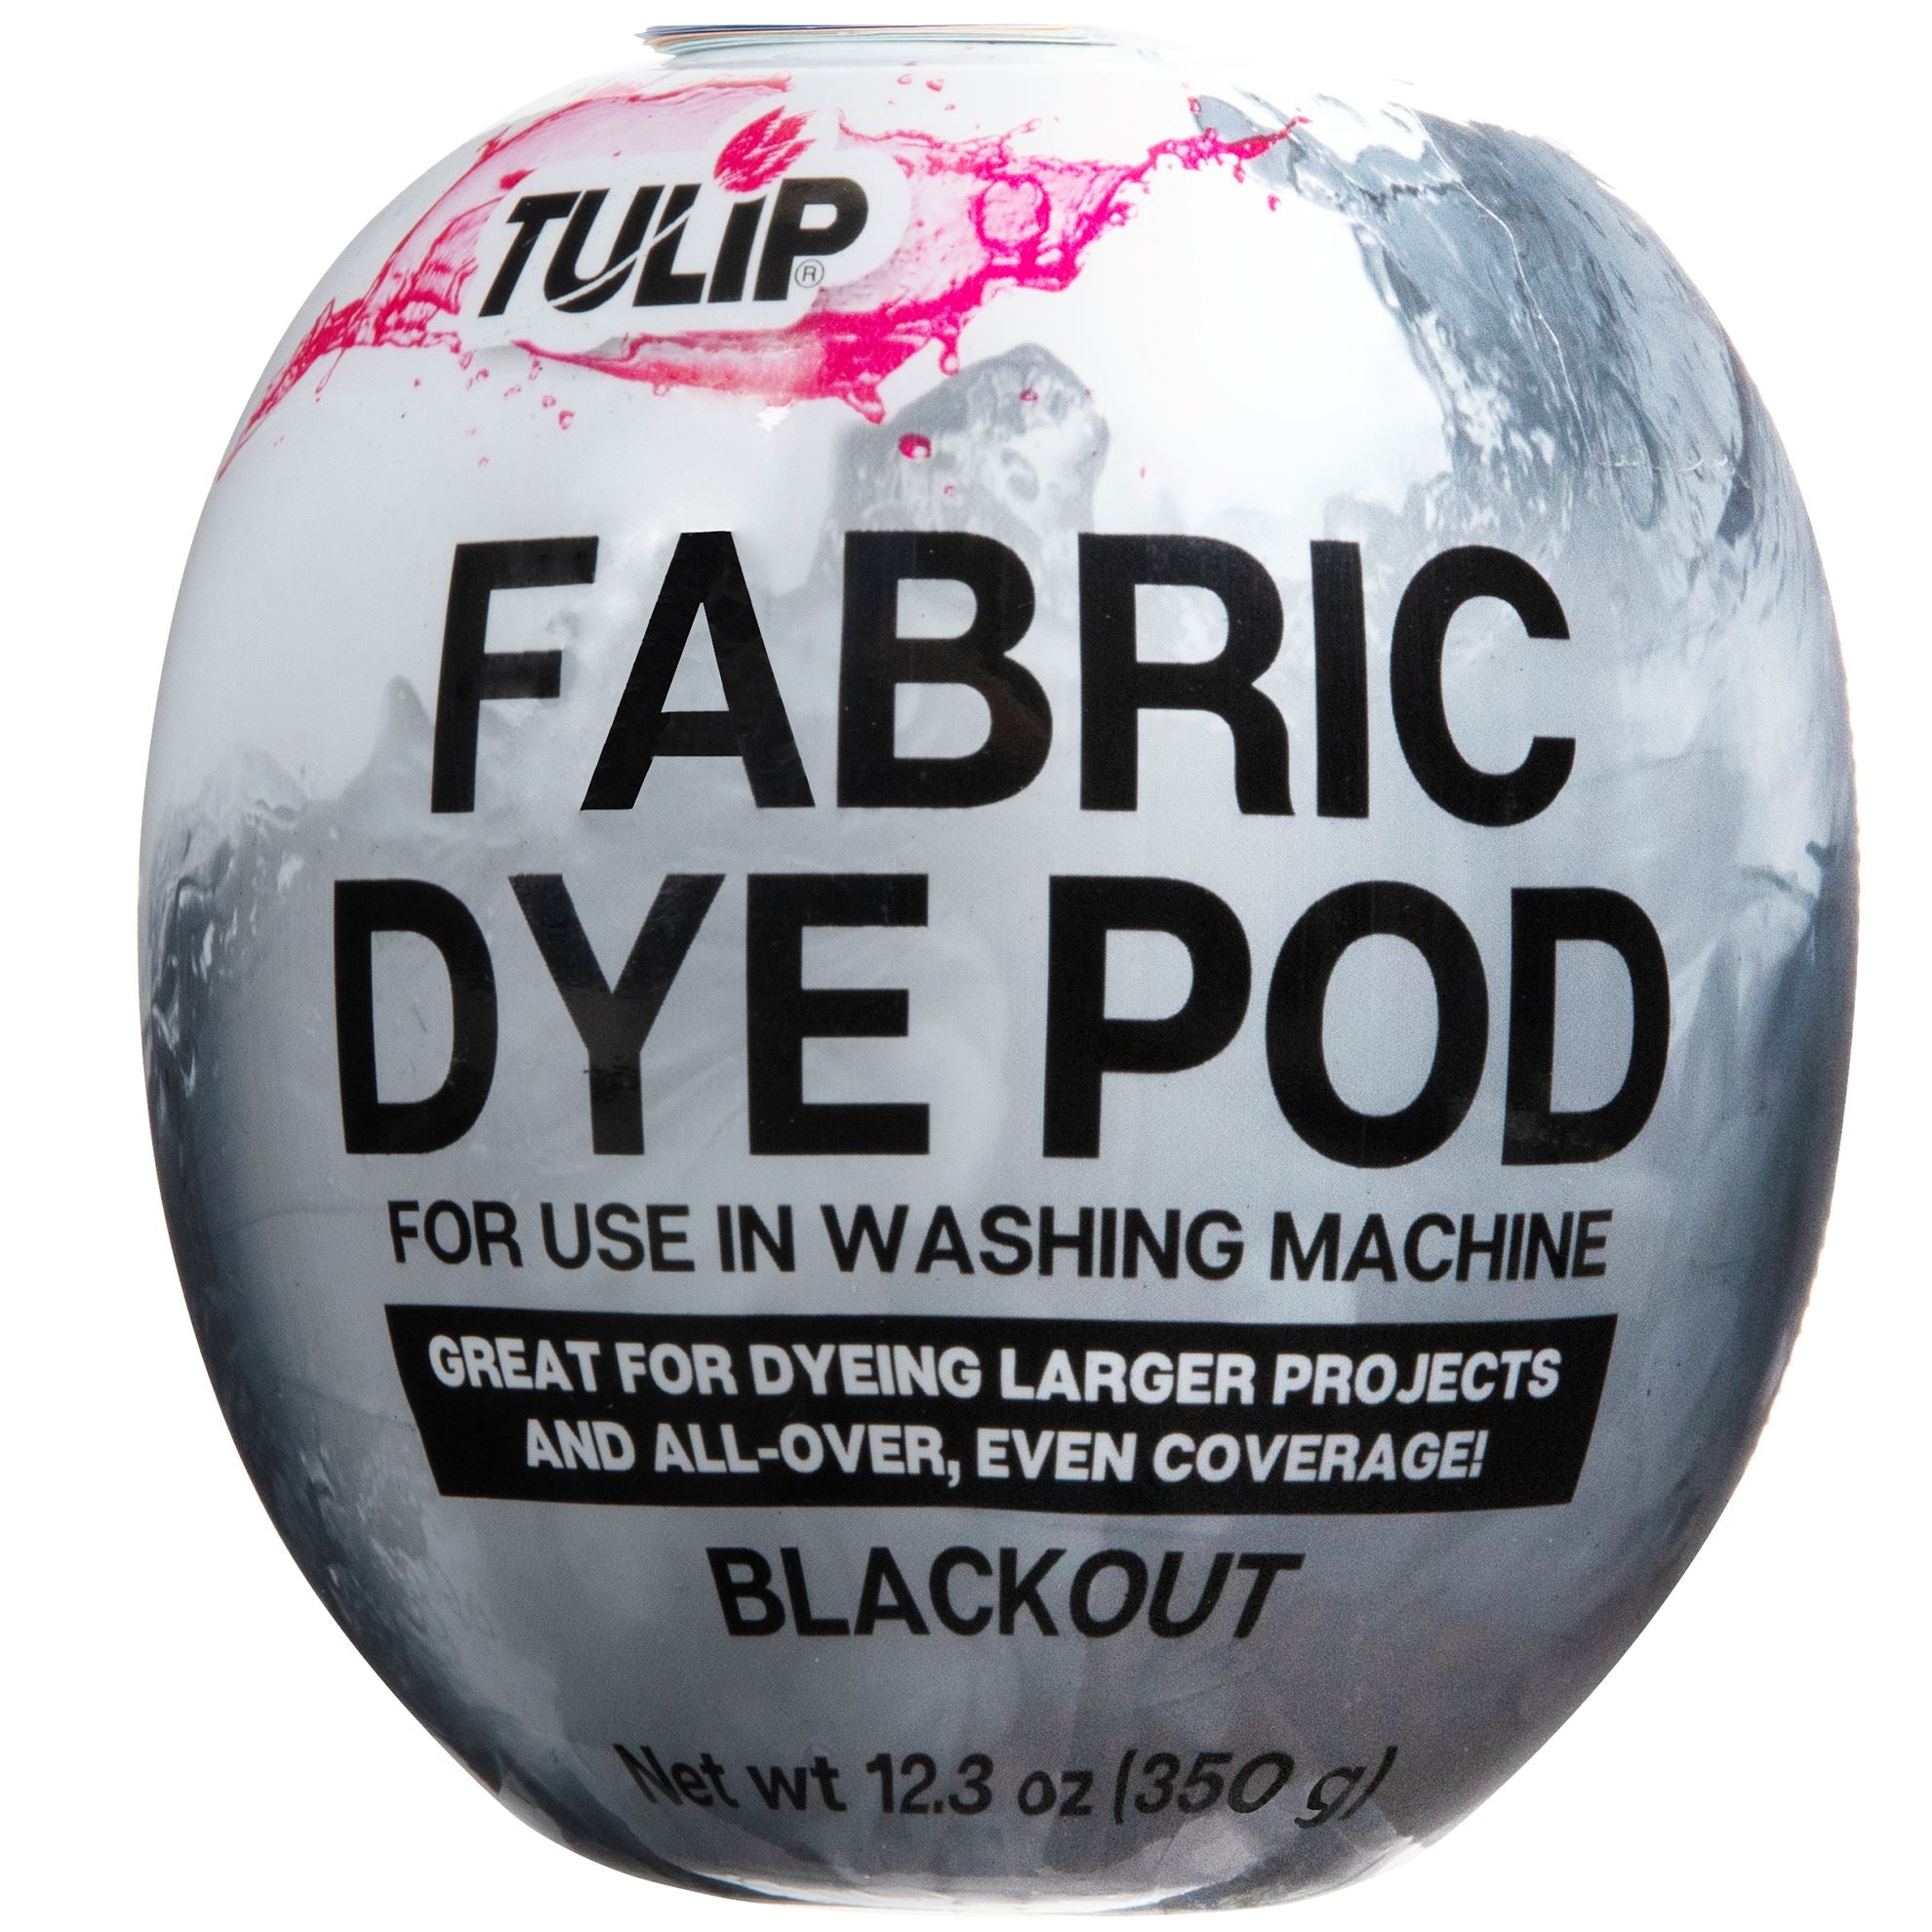  Dye Powdered Fabric Dye, White Wash, 1 7/8-Ounce